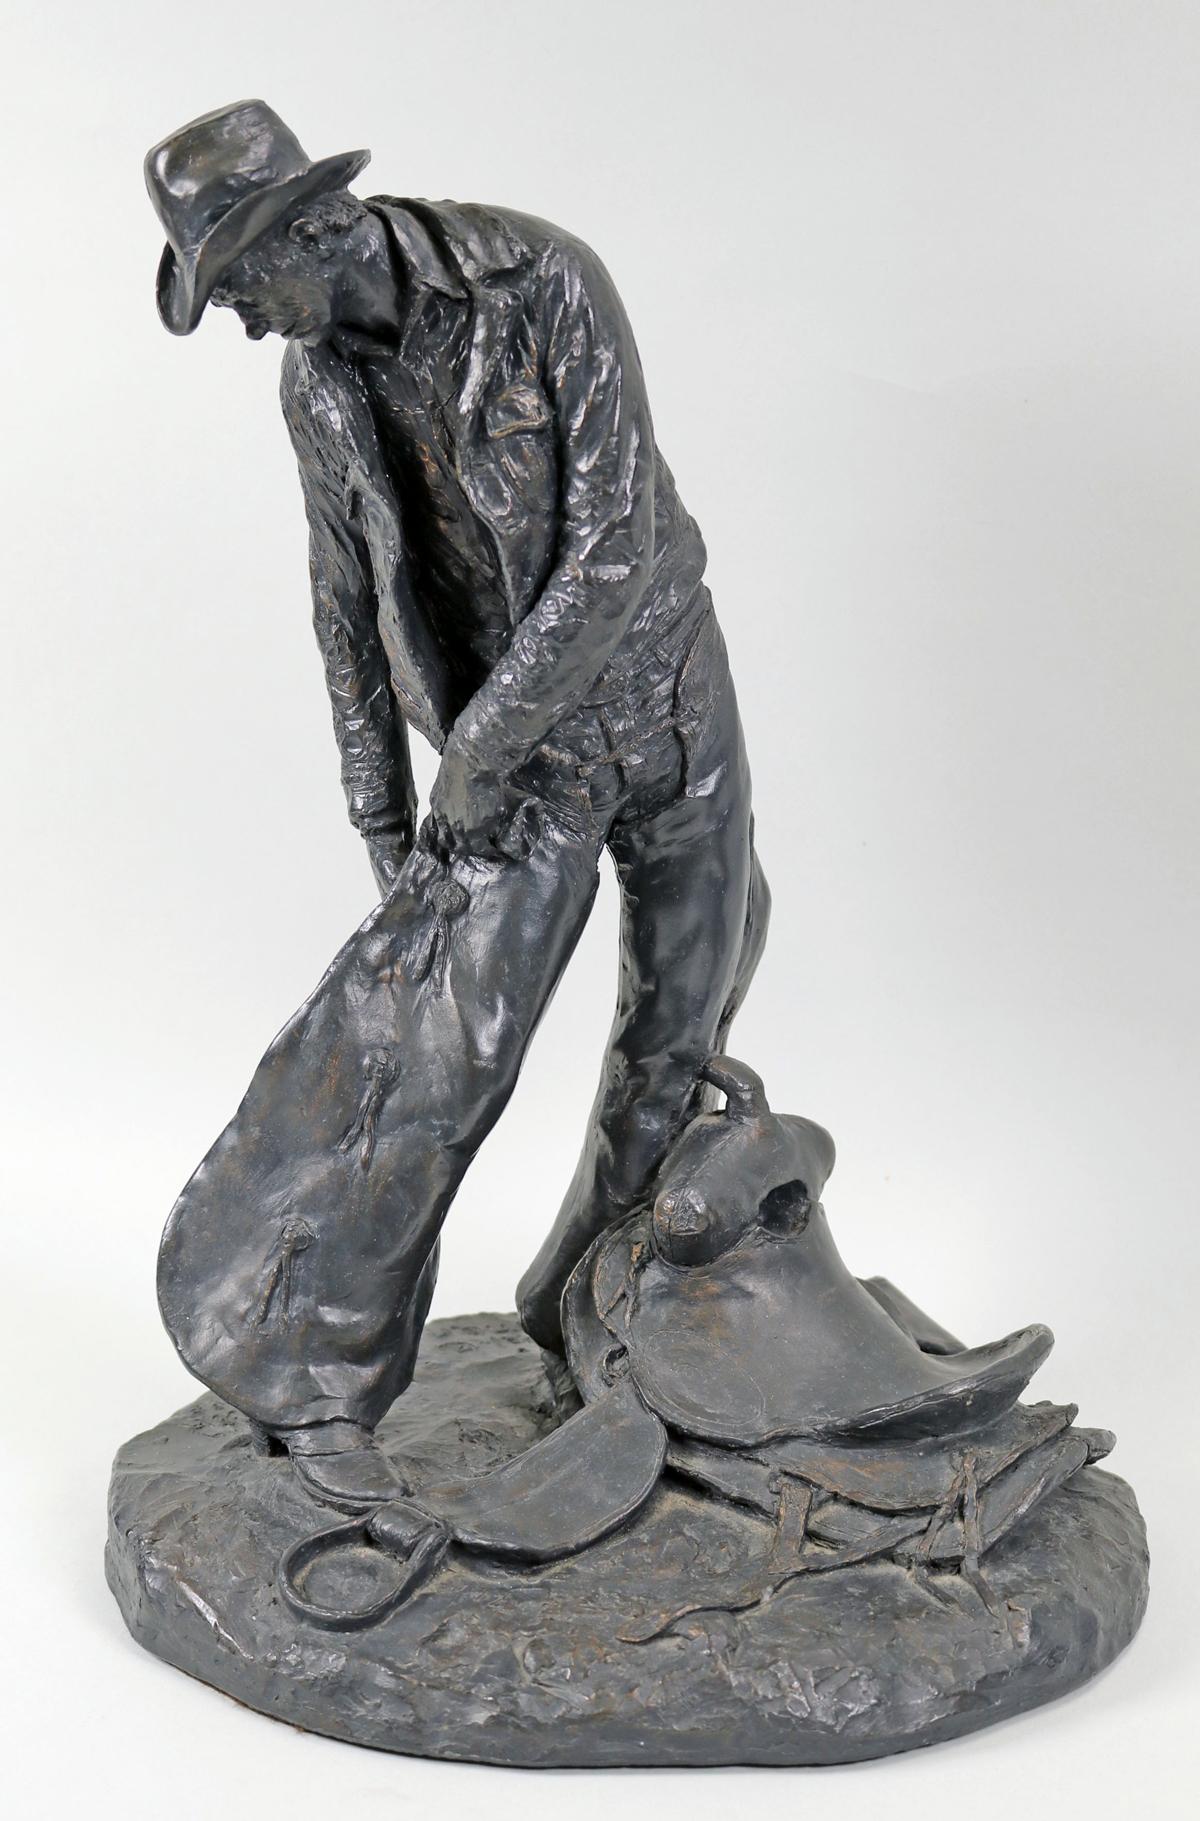 Michael Garman Sculpture "Taking the Rough Off" , Ca. 1972